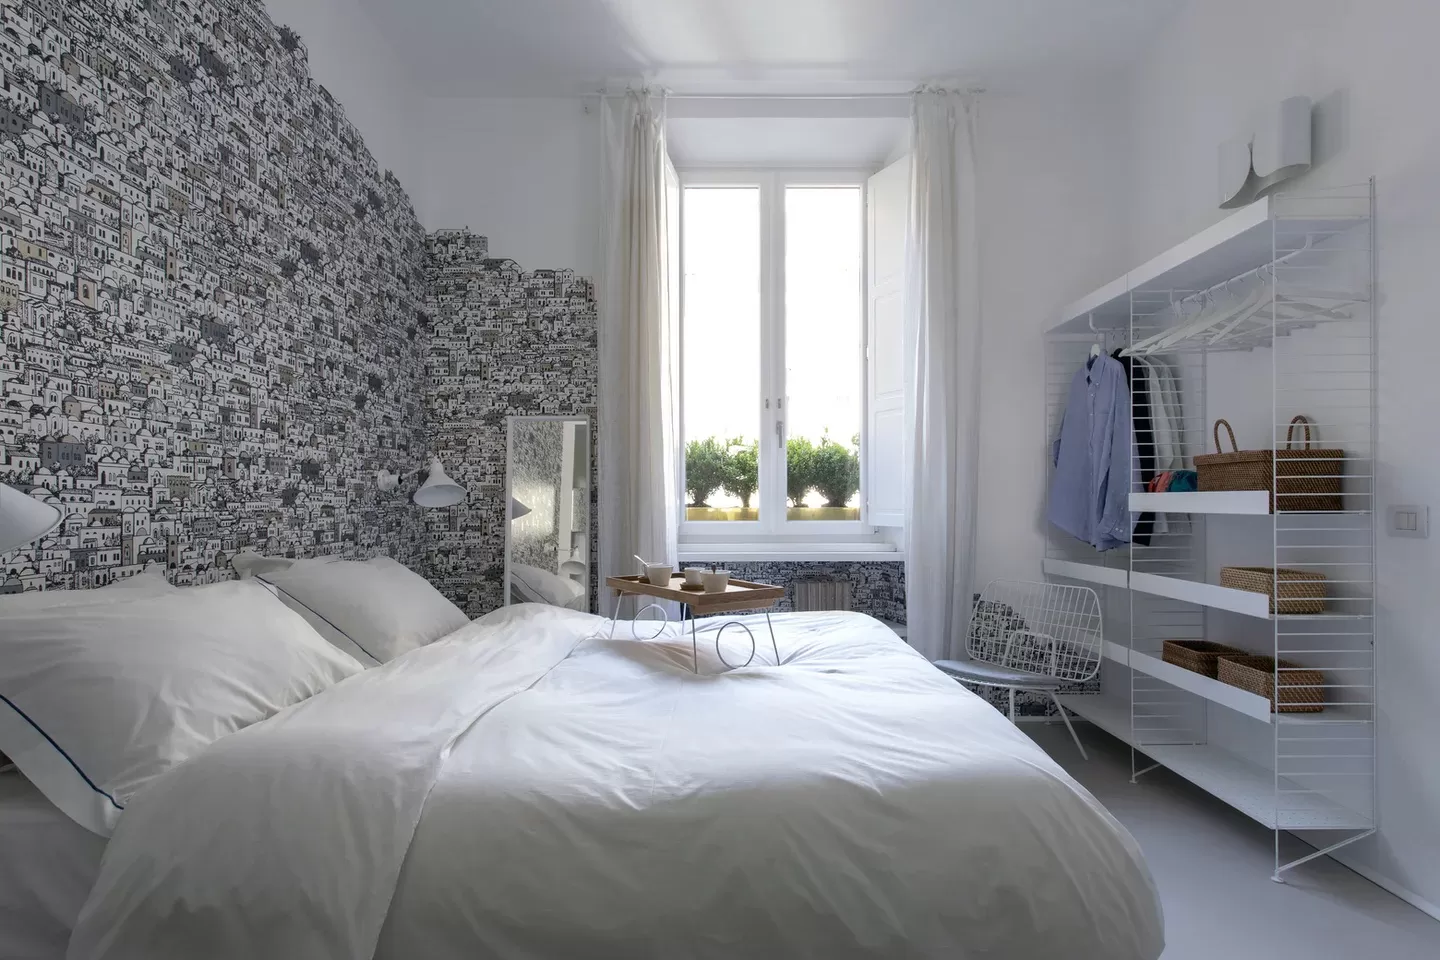 Hotels near Termini Station in Rome - Oregano Green apartment - Bedroom